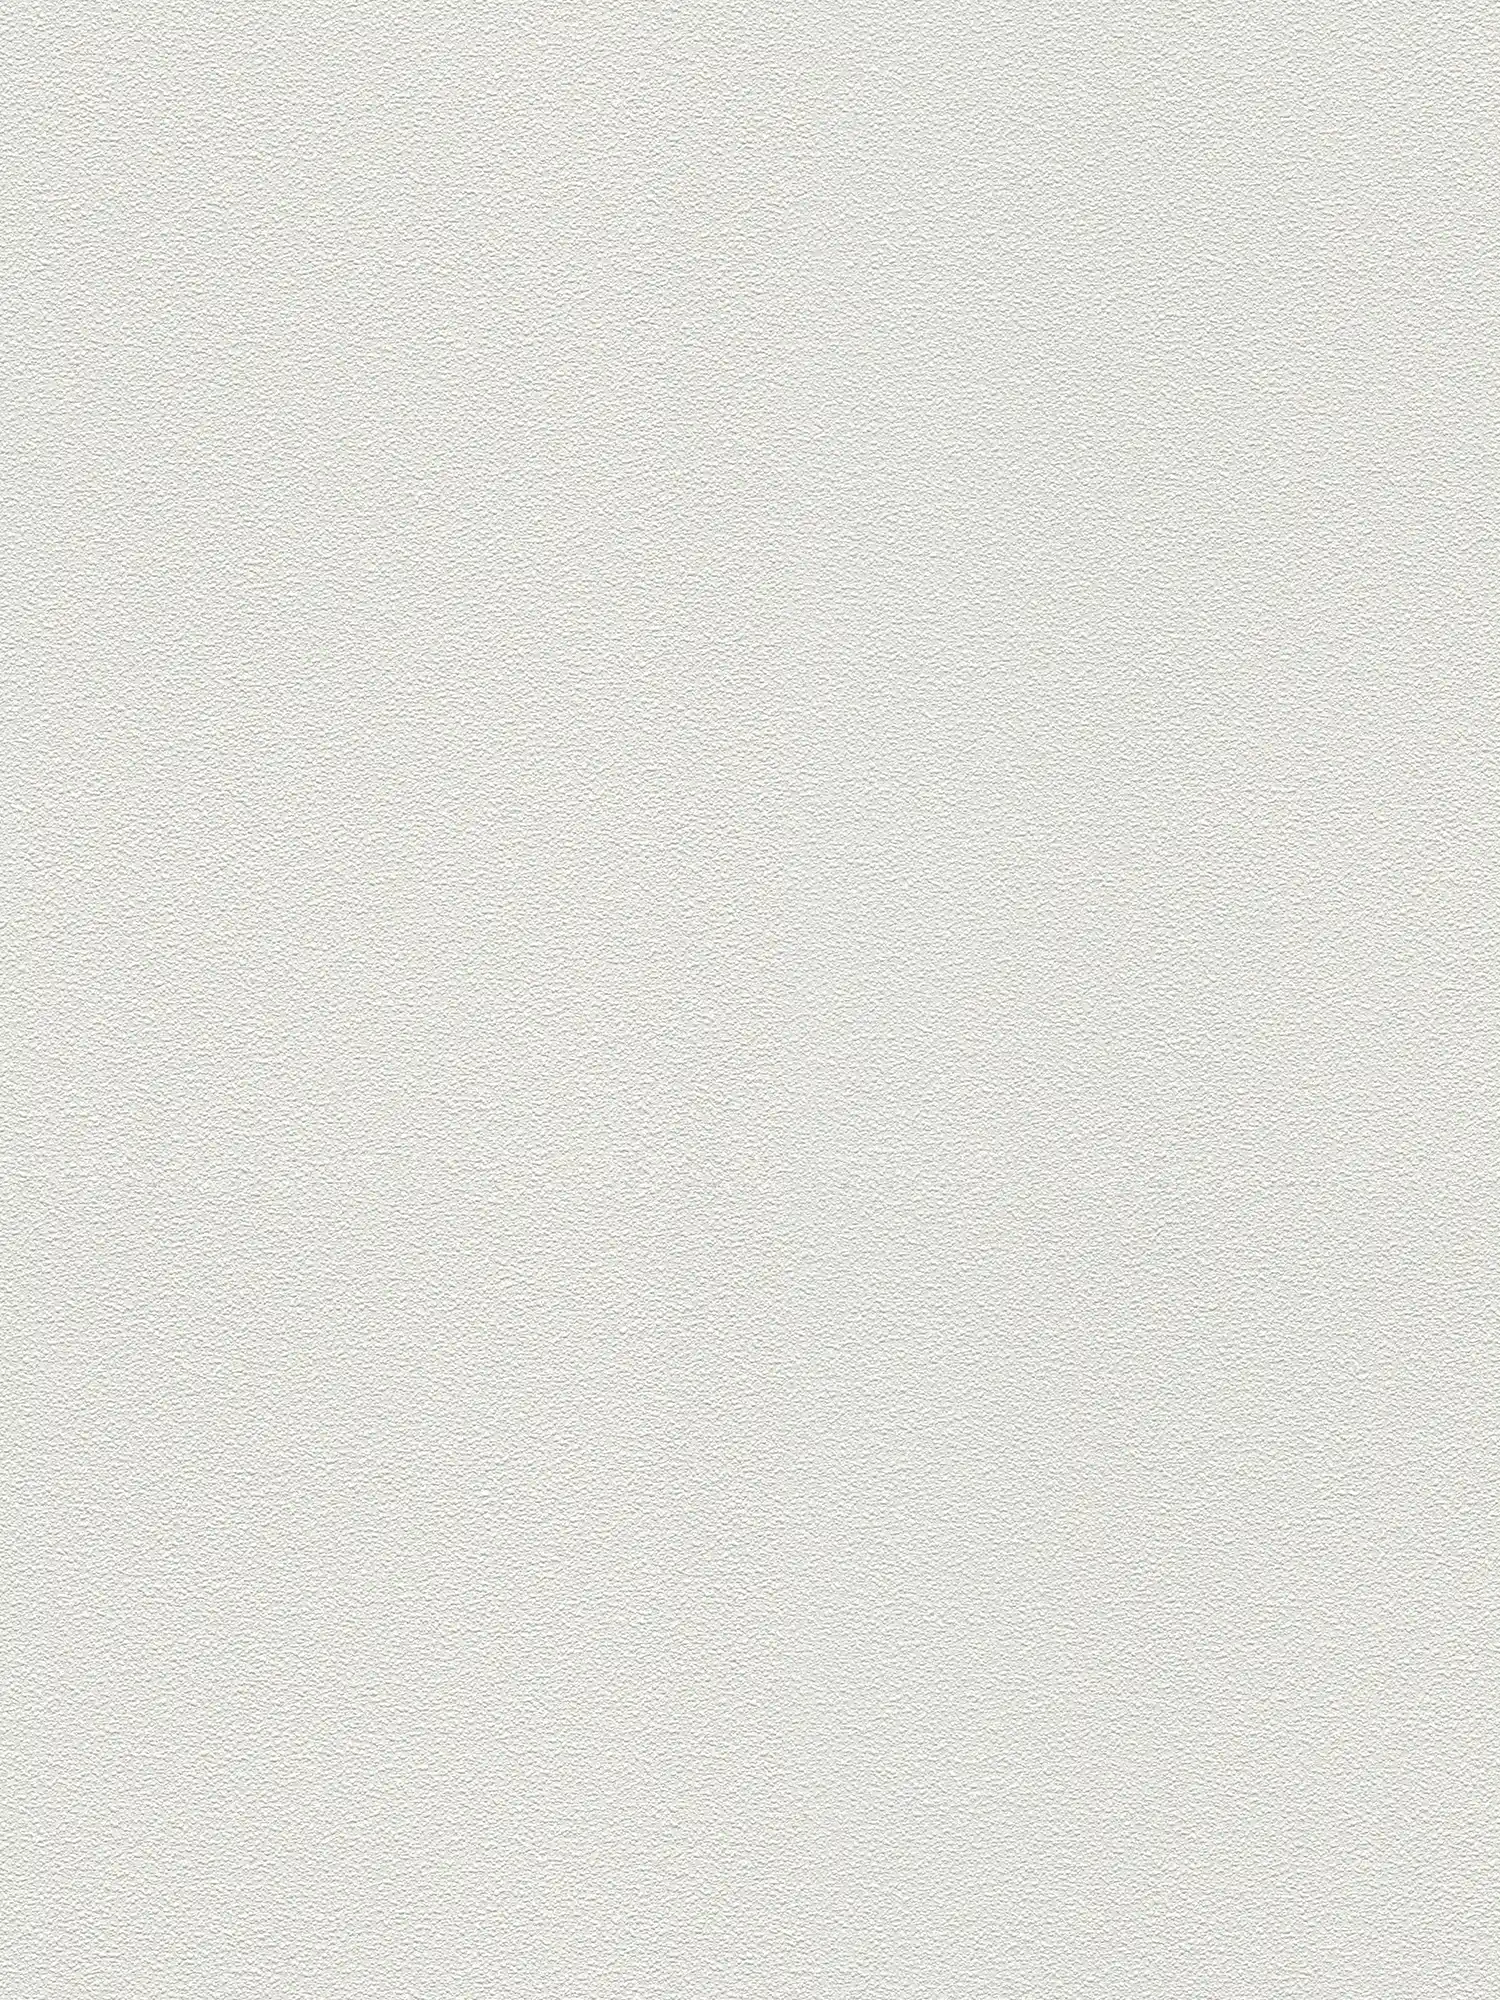 Carta da parati con struttura fine - verniciabile, bianca
